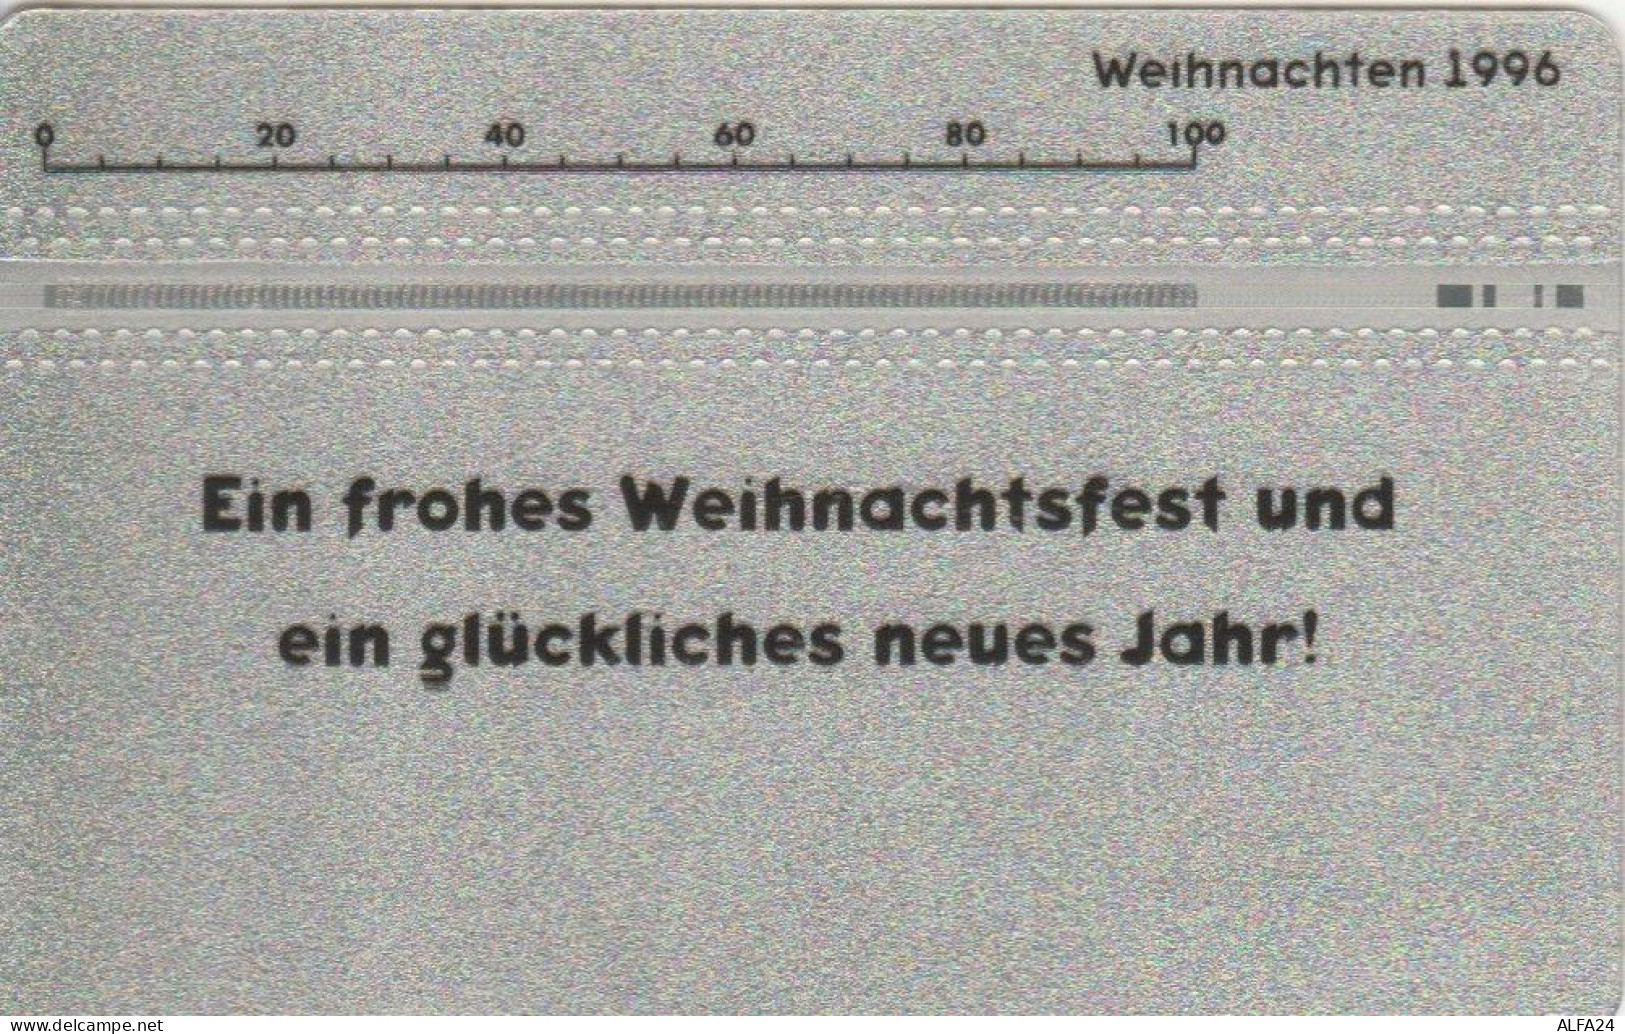 PHONE CARD AUSTRIA NATALE (E95.16.3 - Oesterreich